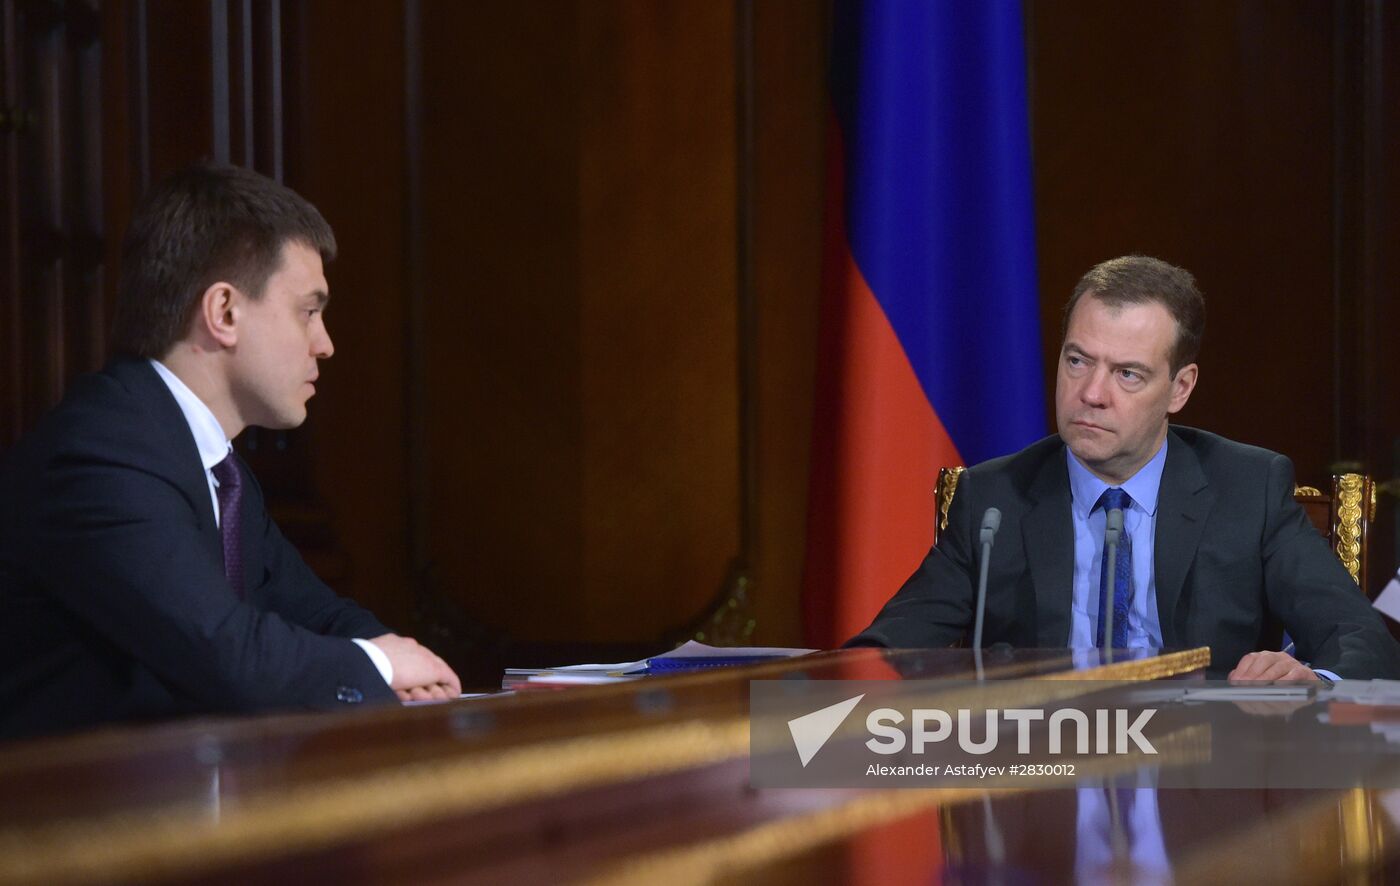 Prime Minister Medvedev meets with Russian Academy of Sciences President Fortov and FASO Head Kotyukov